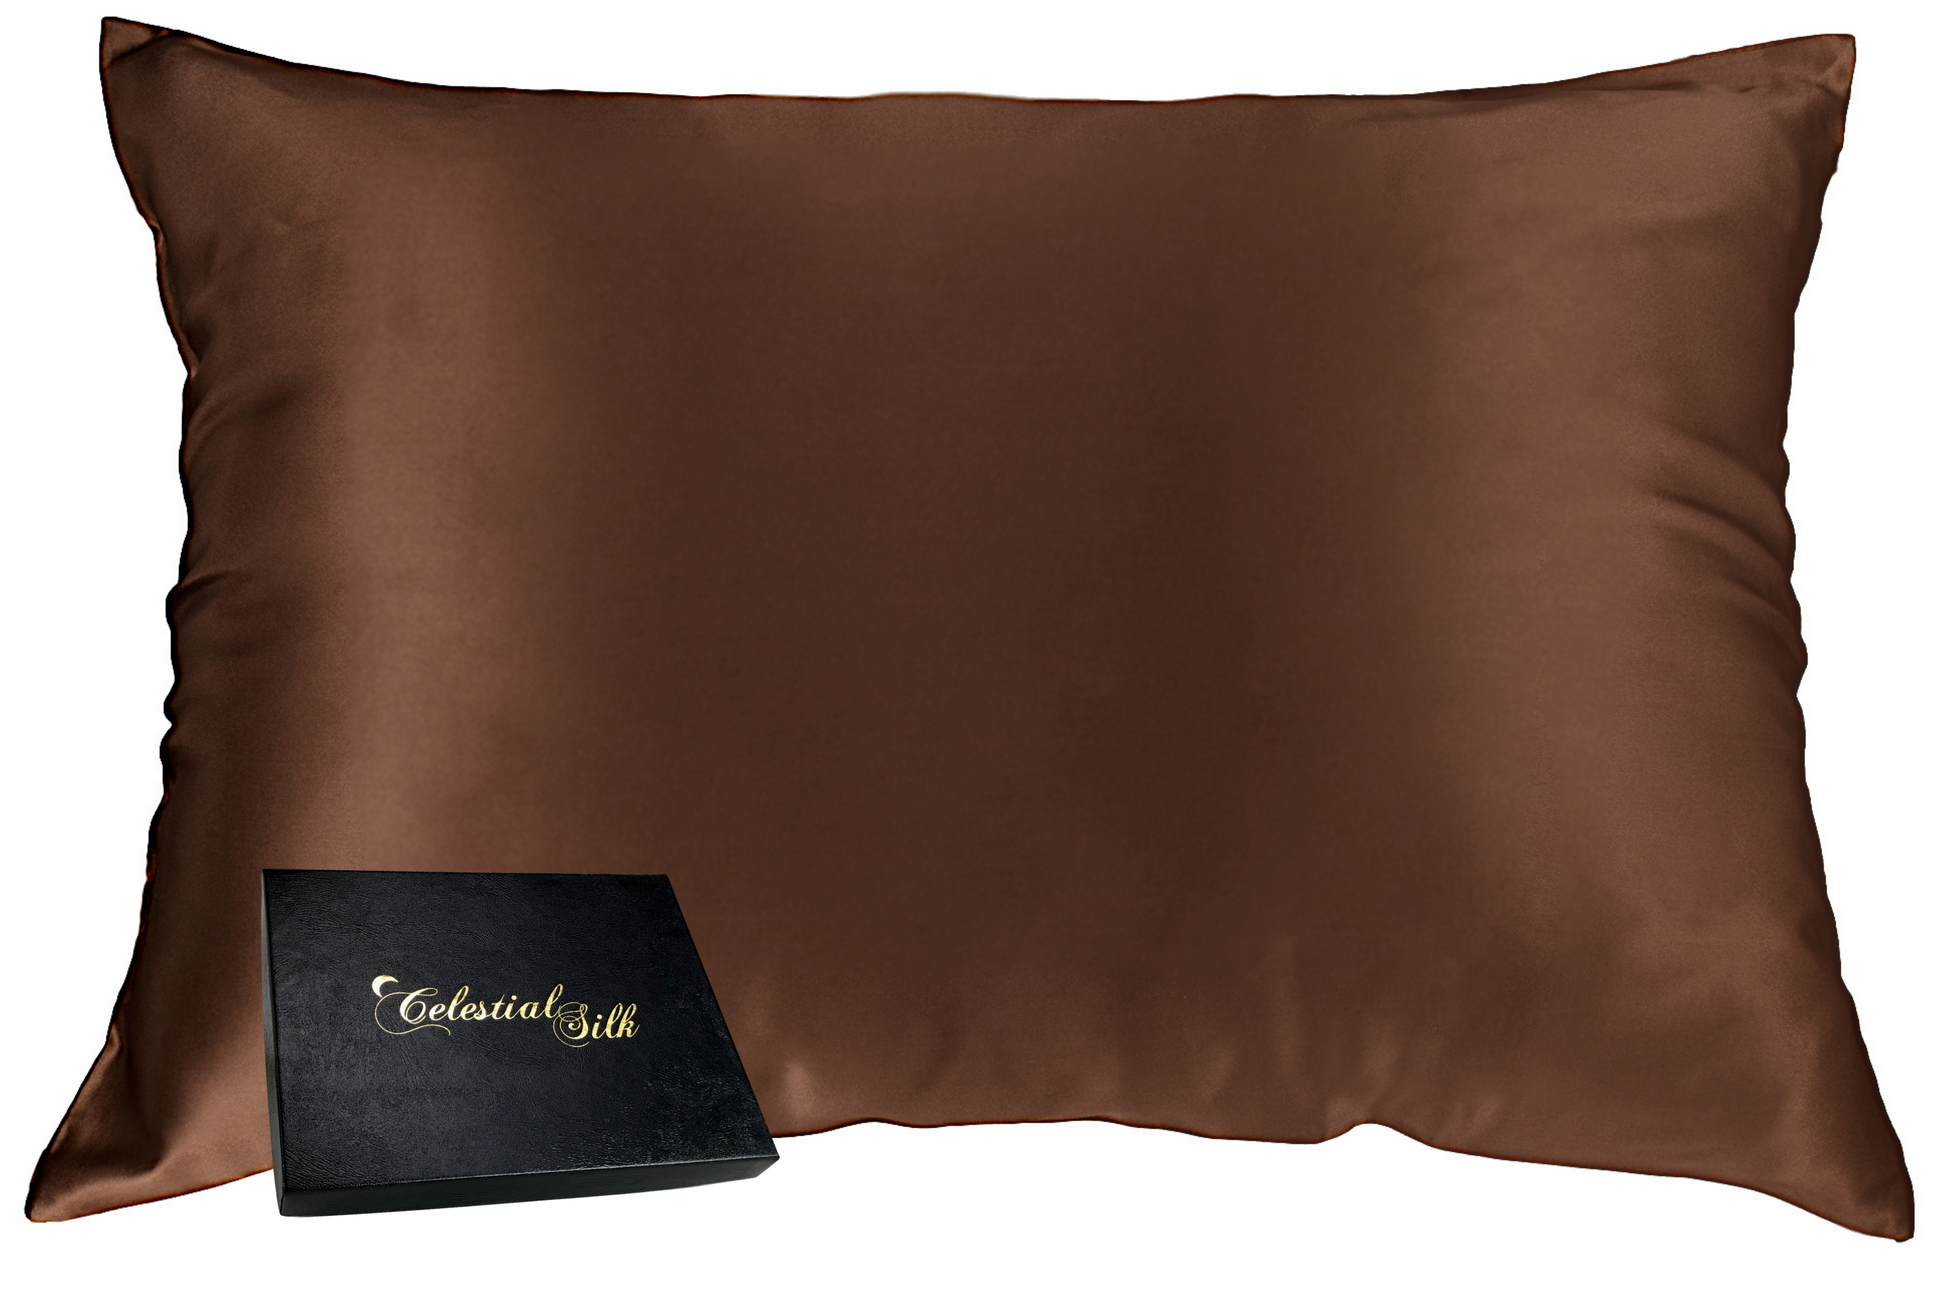 Celestial Silk chocolate brown mulberry silk pillowcase